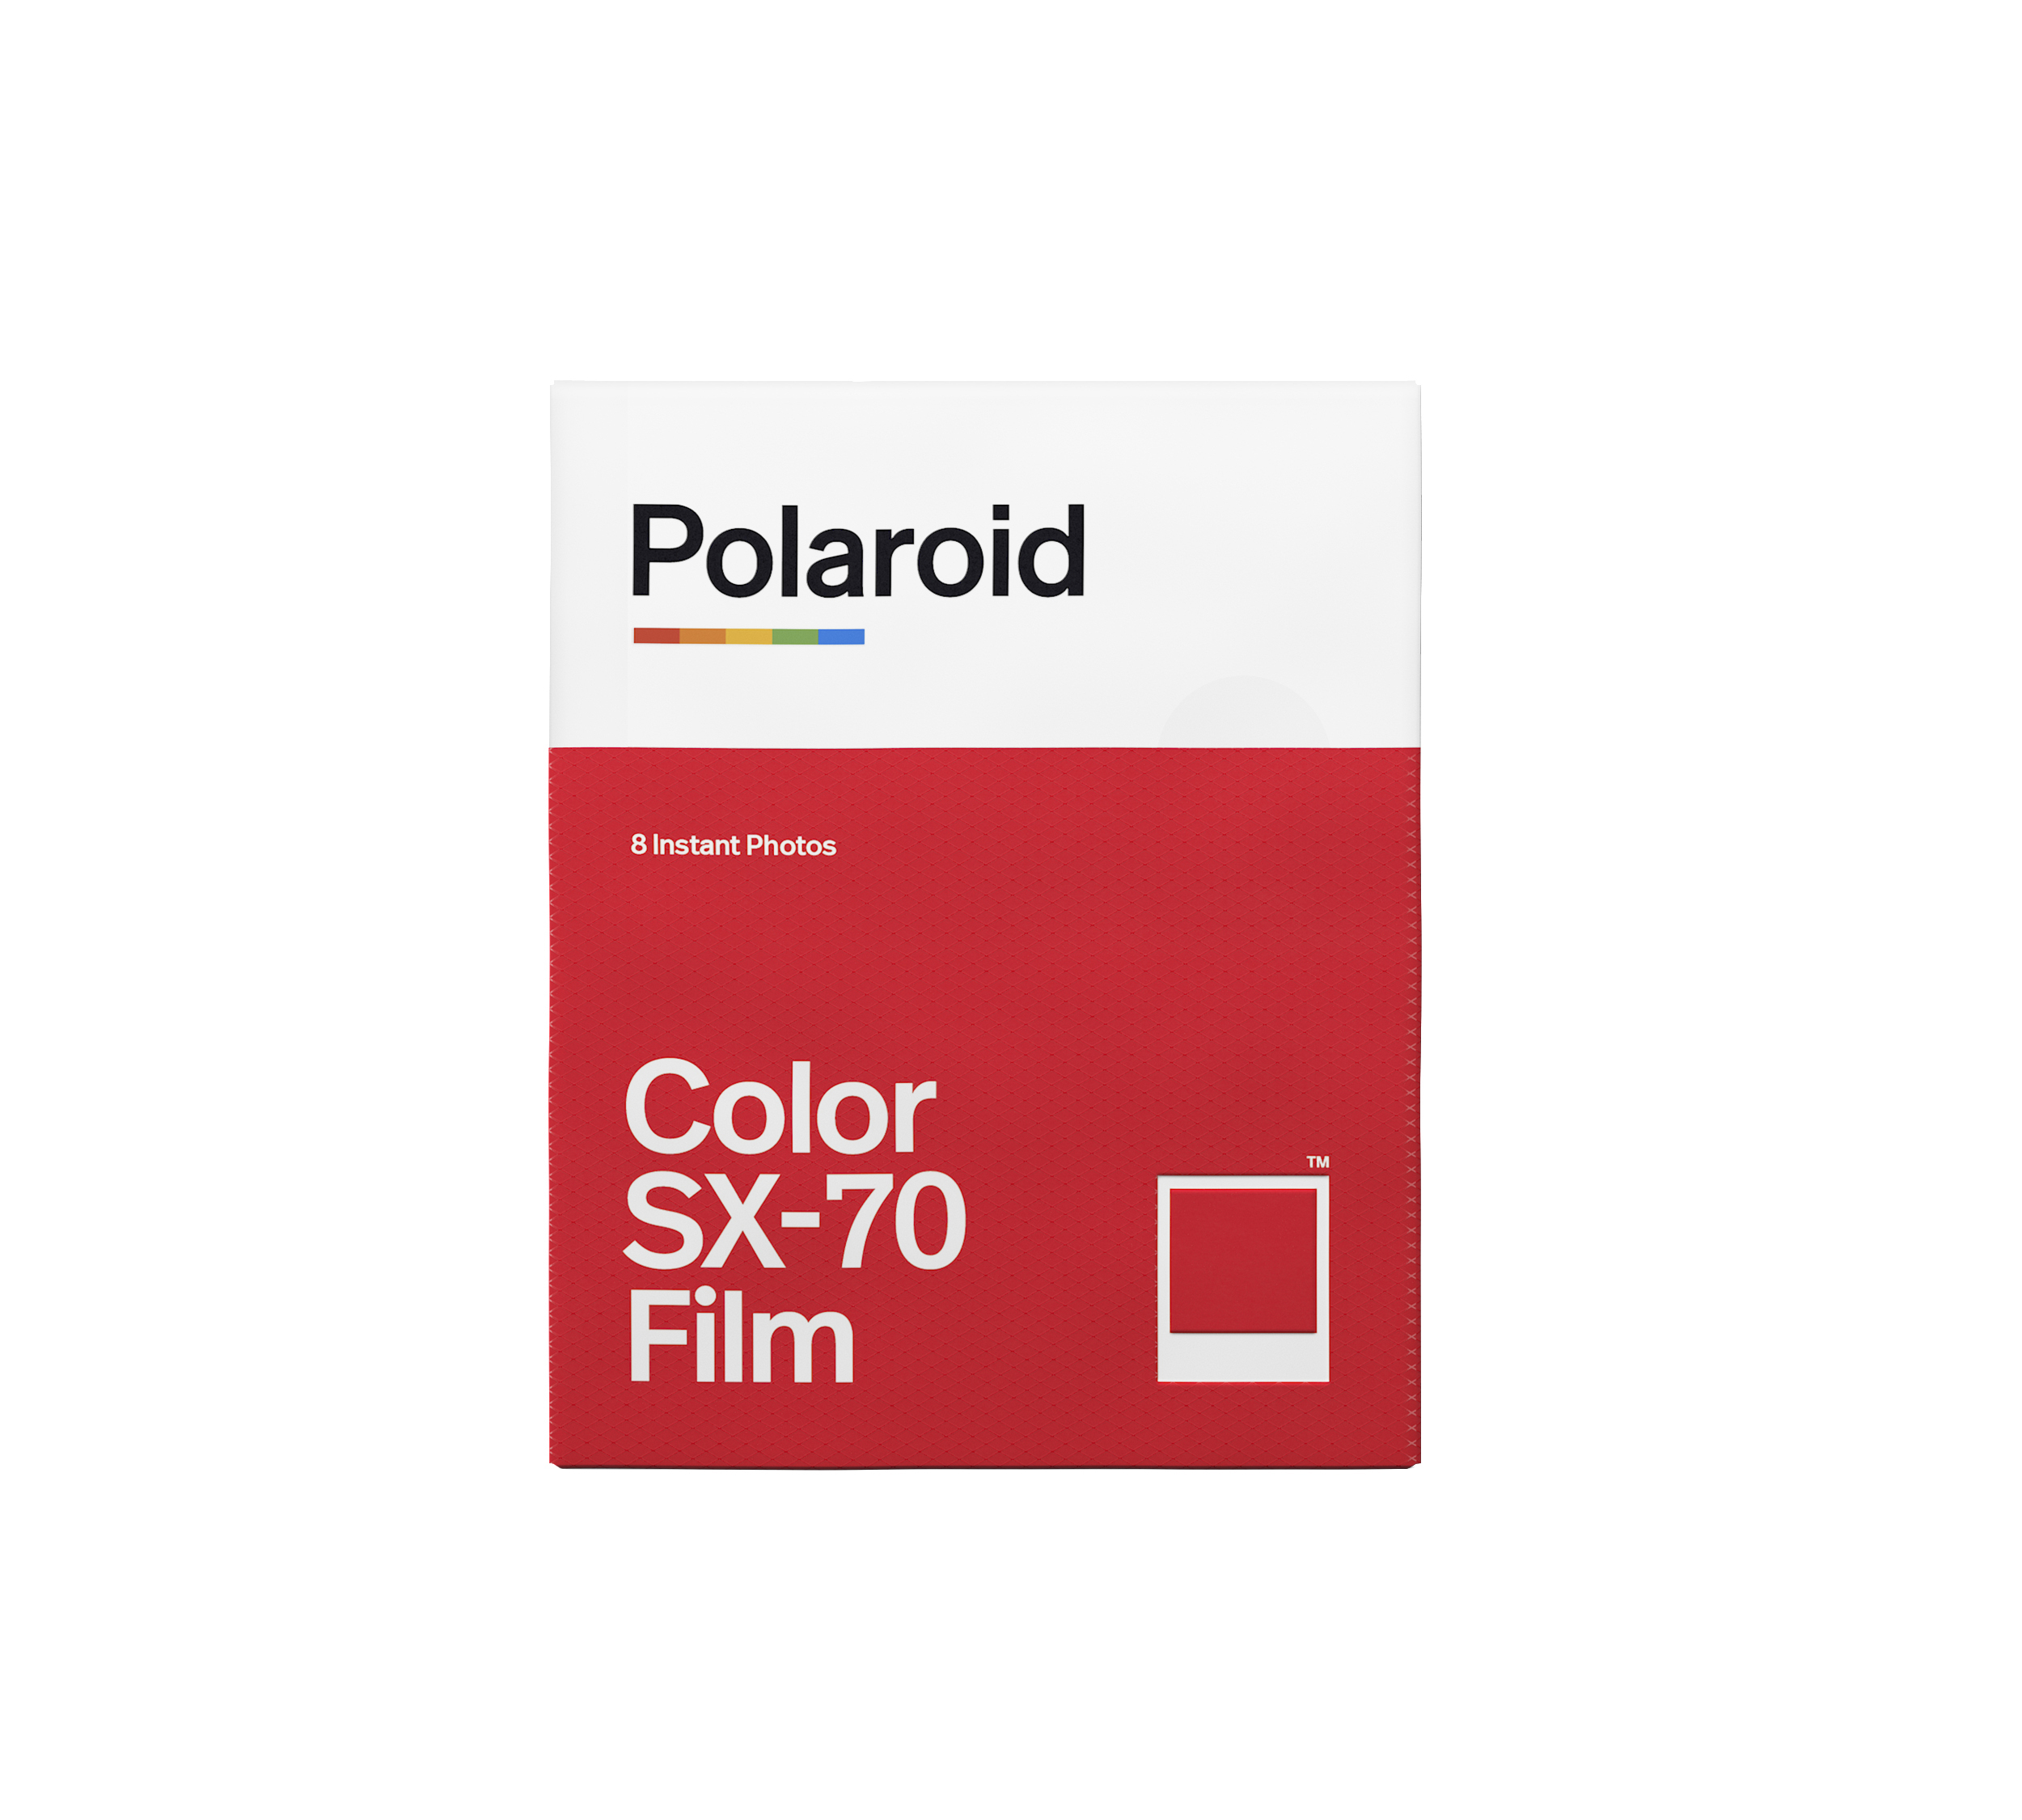 POLAROID Sofortbildfilm Farbe für SX-70 weißer Sofortbildfilm Rahmen